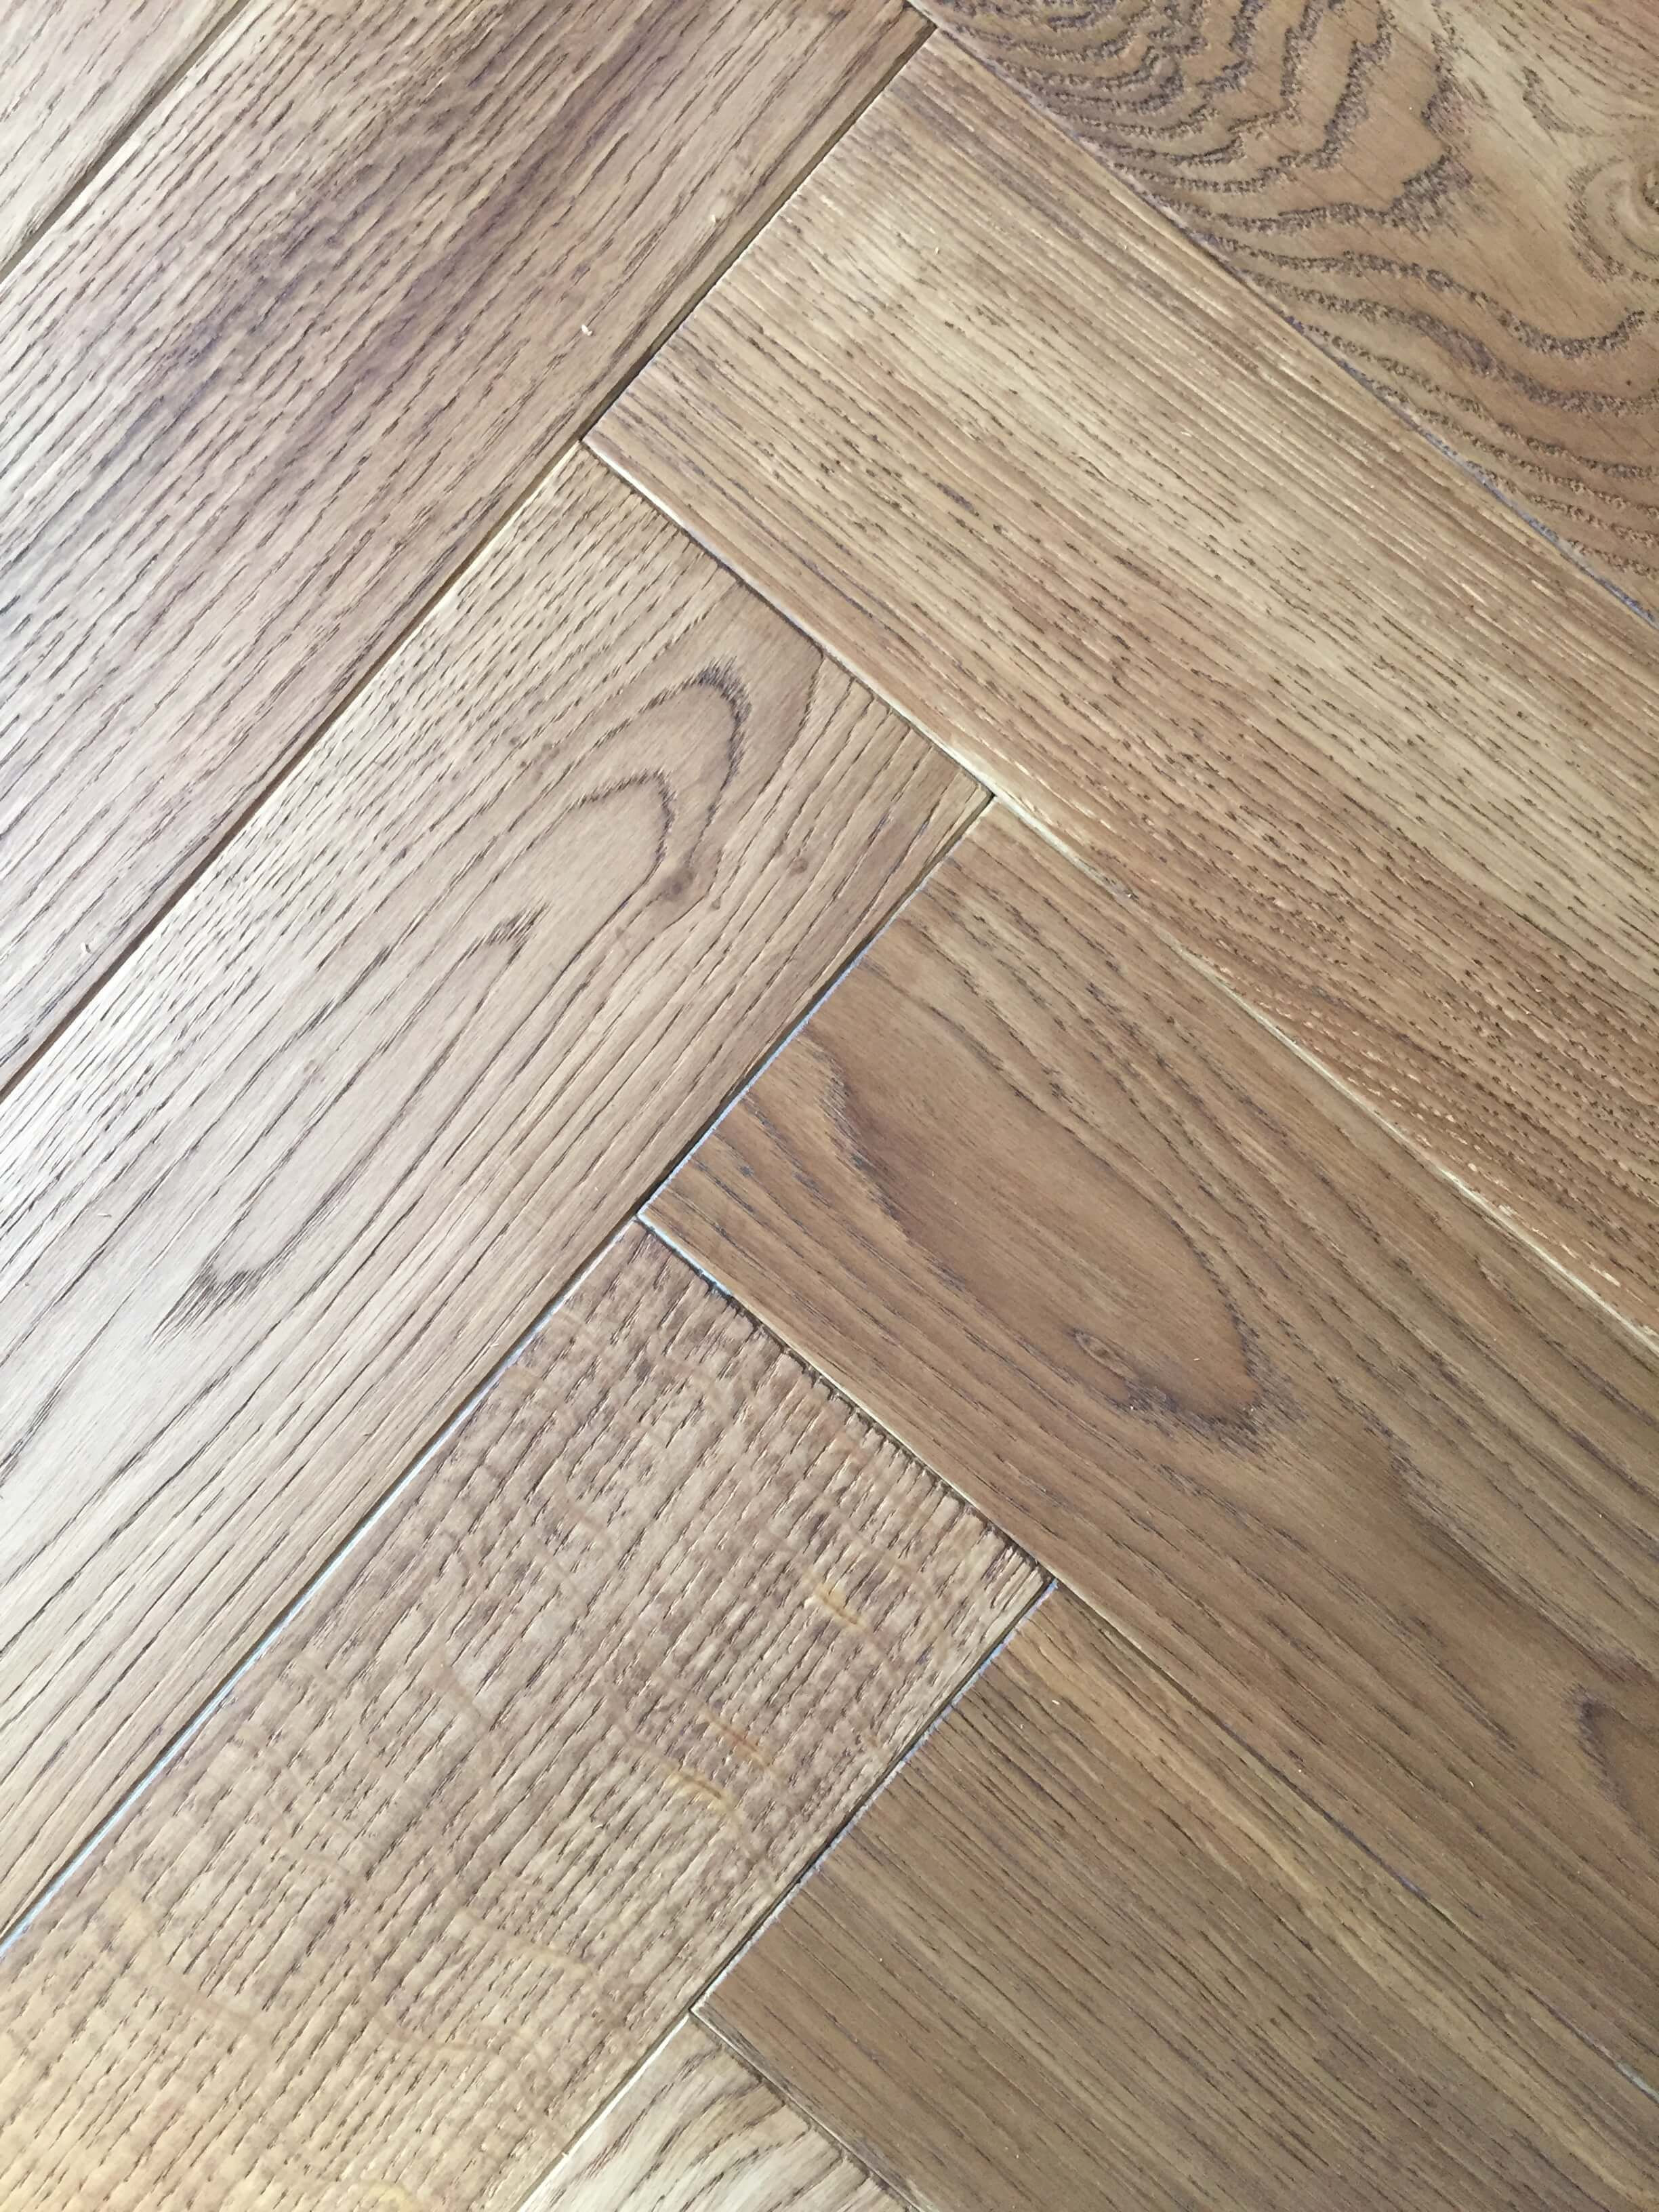 5 inch oak hardwood flooring of prefinished wood flooring vintage white oak costa hardwood floor within prefinished wood flooring new decorating an open floor plan living room awesome design plan 0d